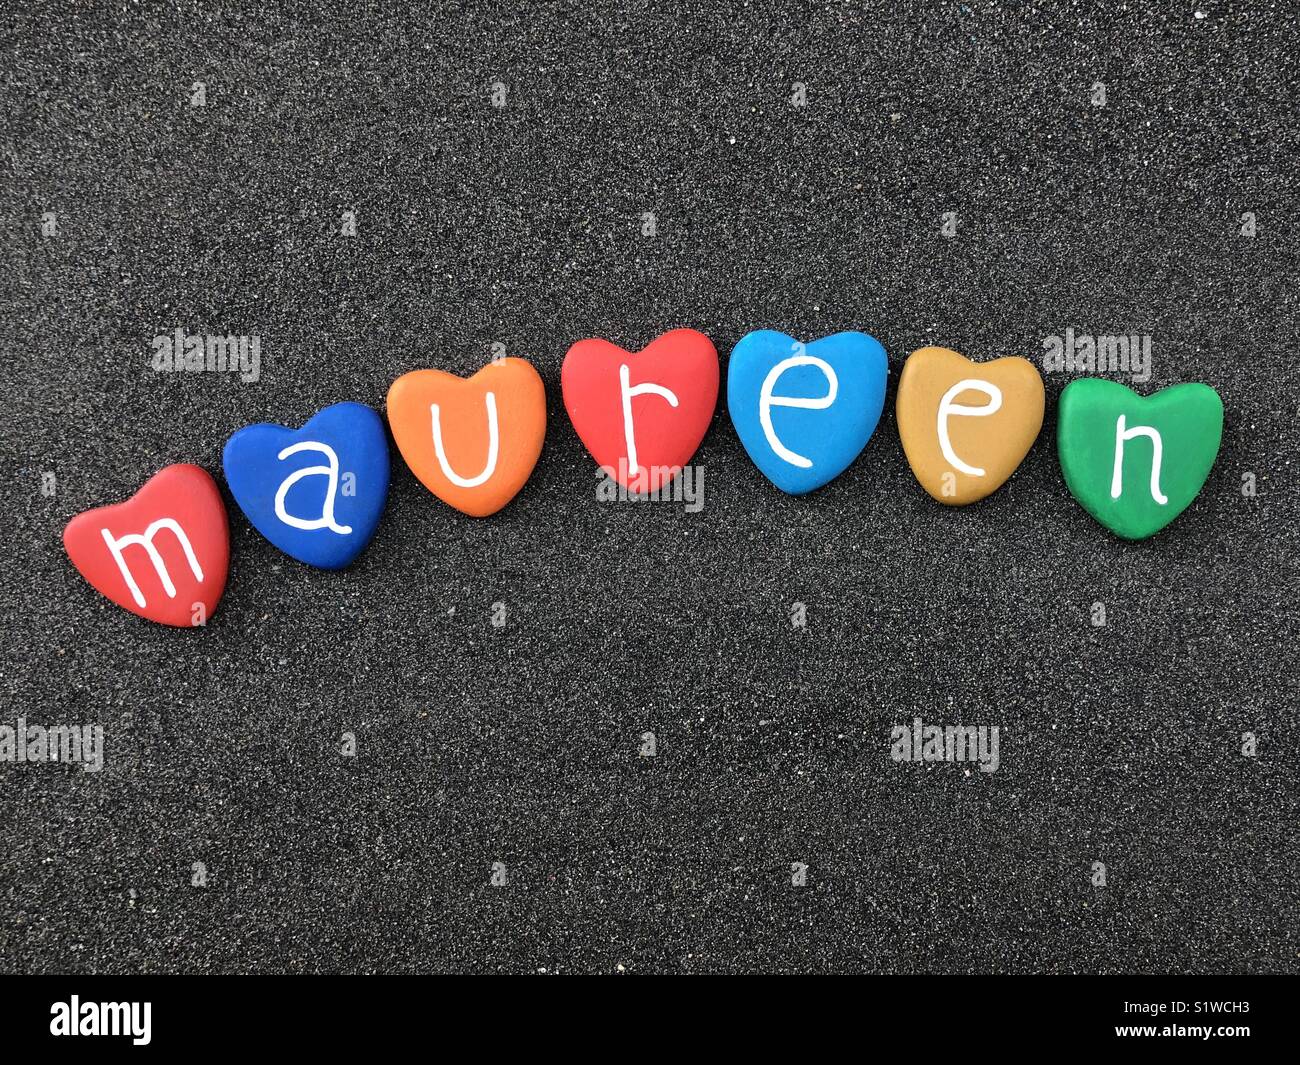 Maureen, feminine name with multicolored heart stones over black volcanic sand Stock Photo